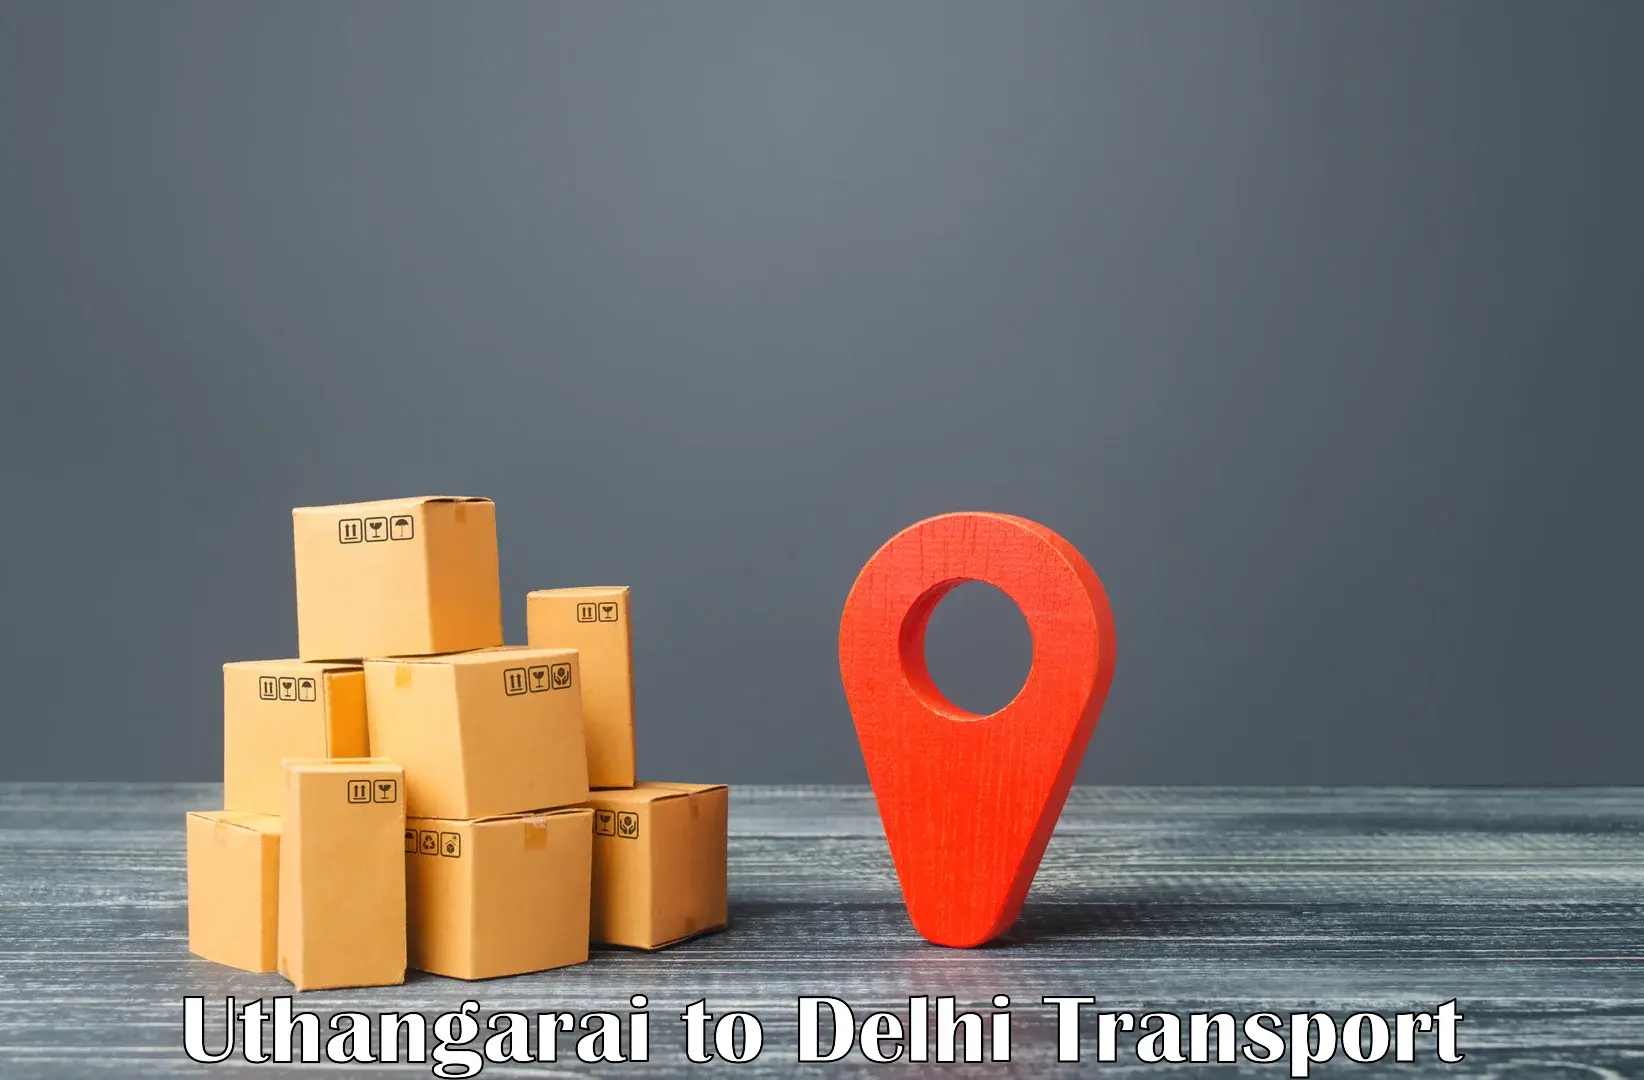 Express transport services Uthangarai to Delhi